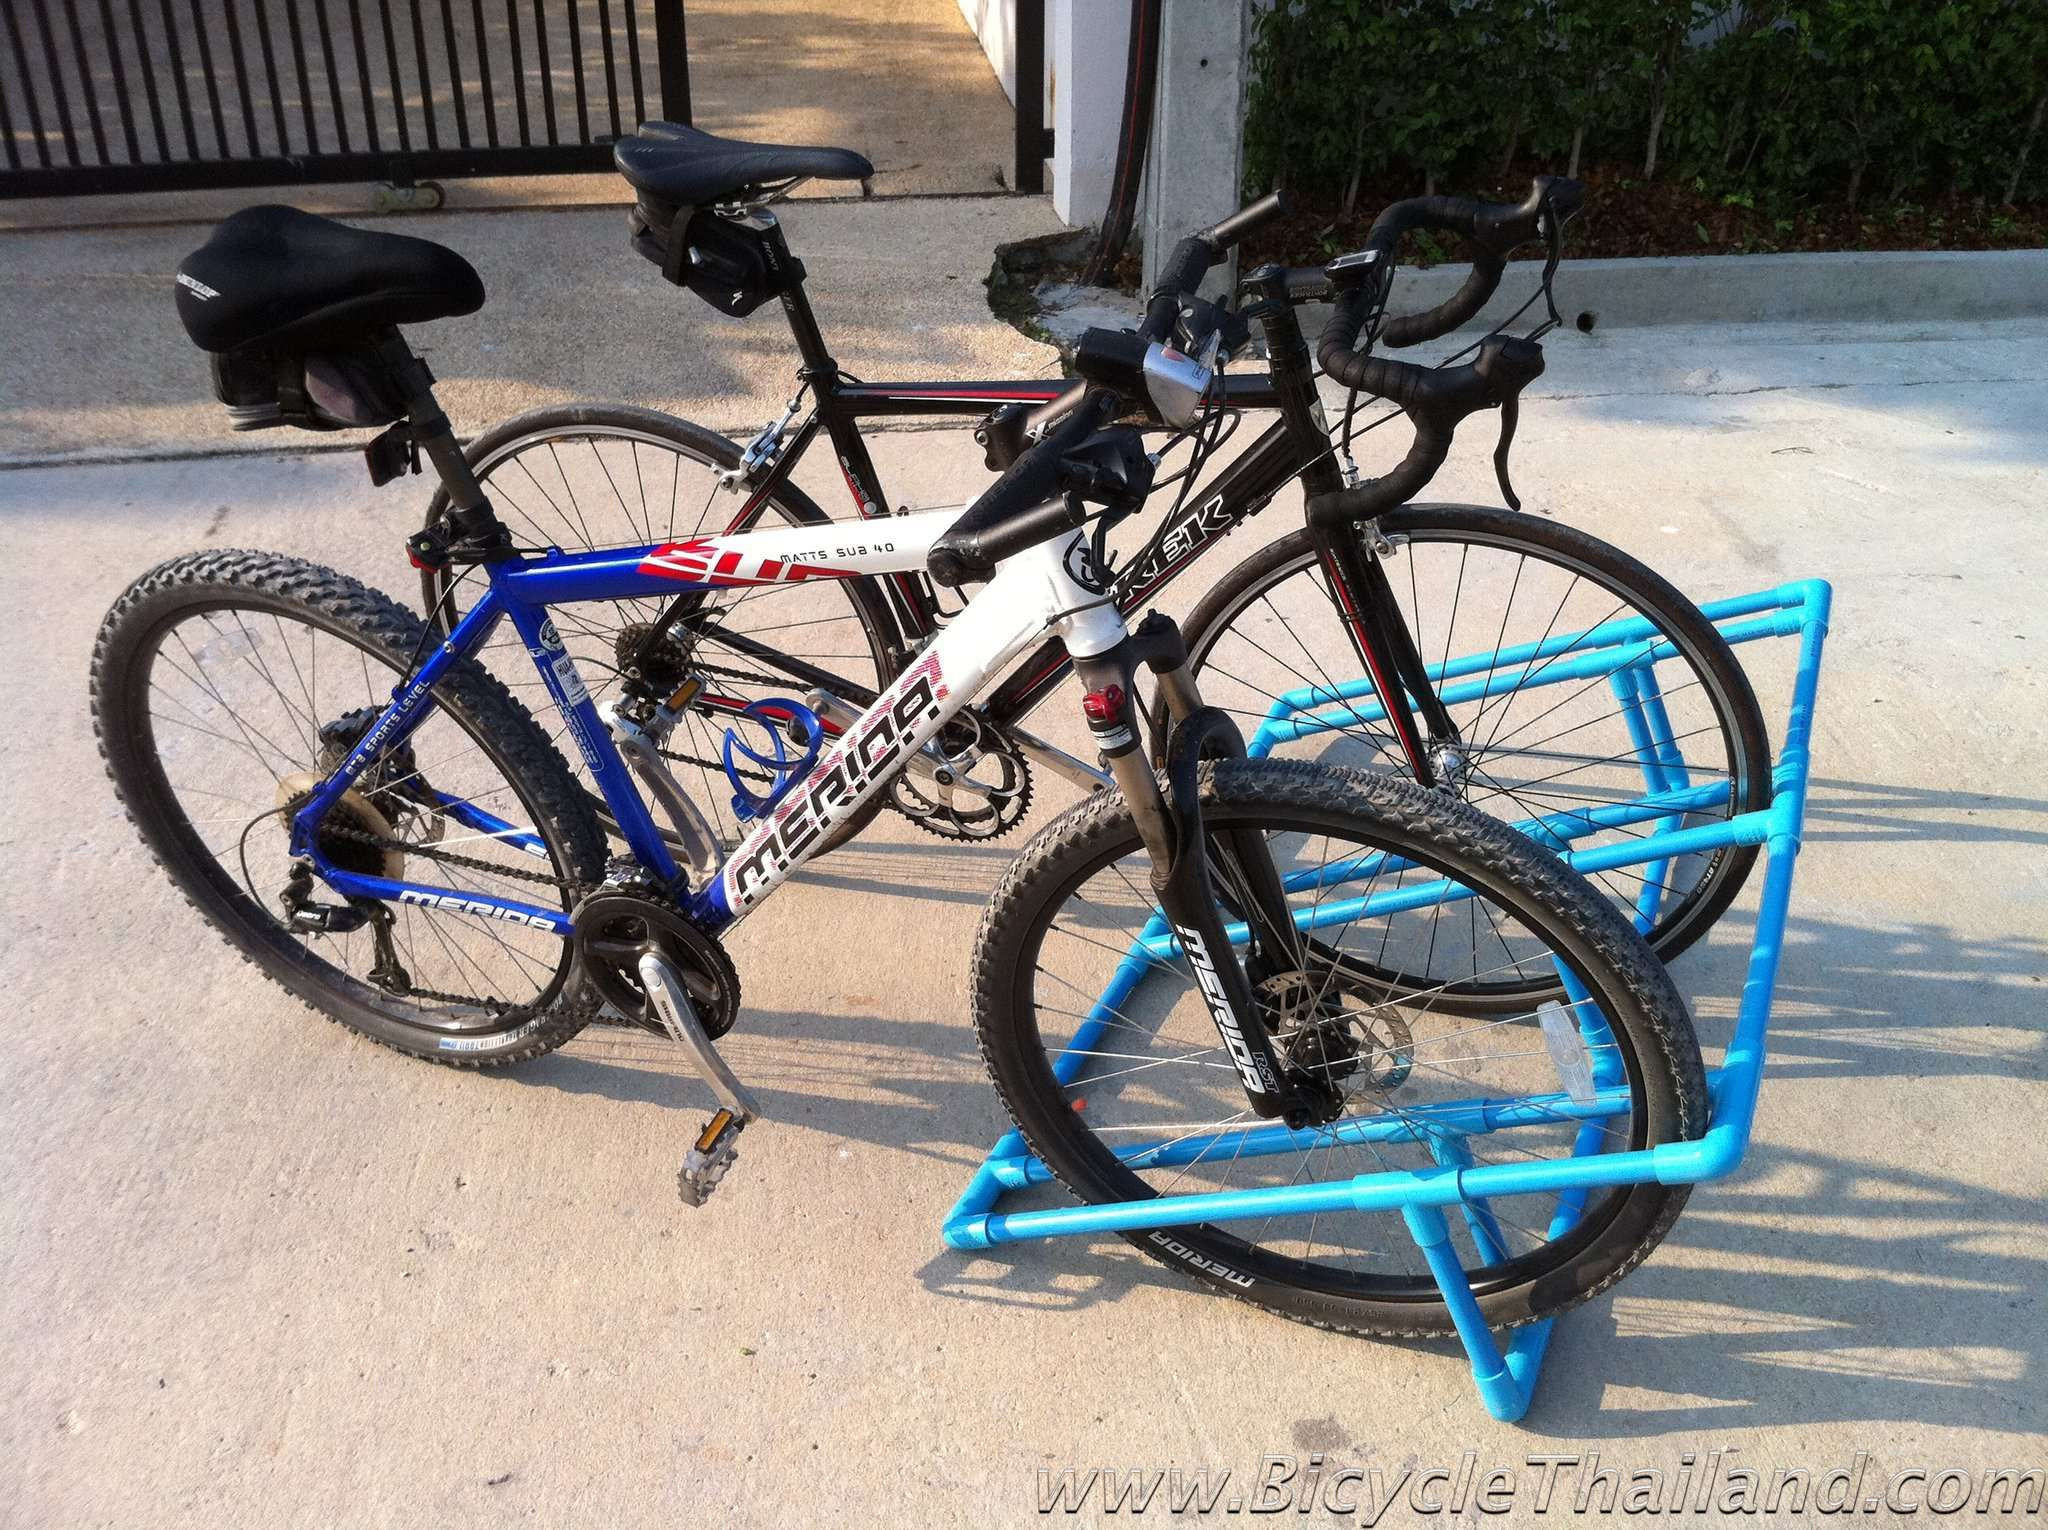 DIY Bike Rack Pvc
 How to Make a PVC Bike Rack DIY Pinterest